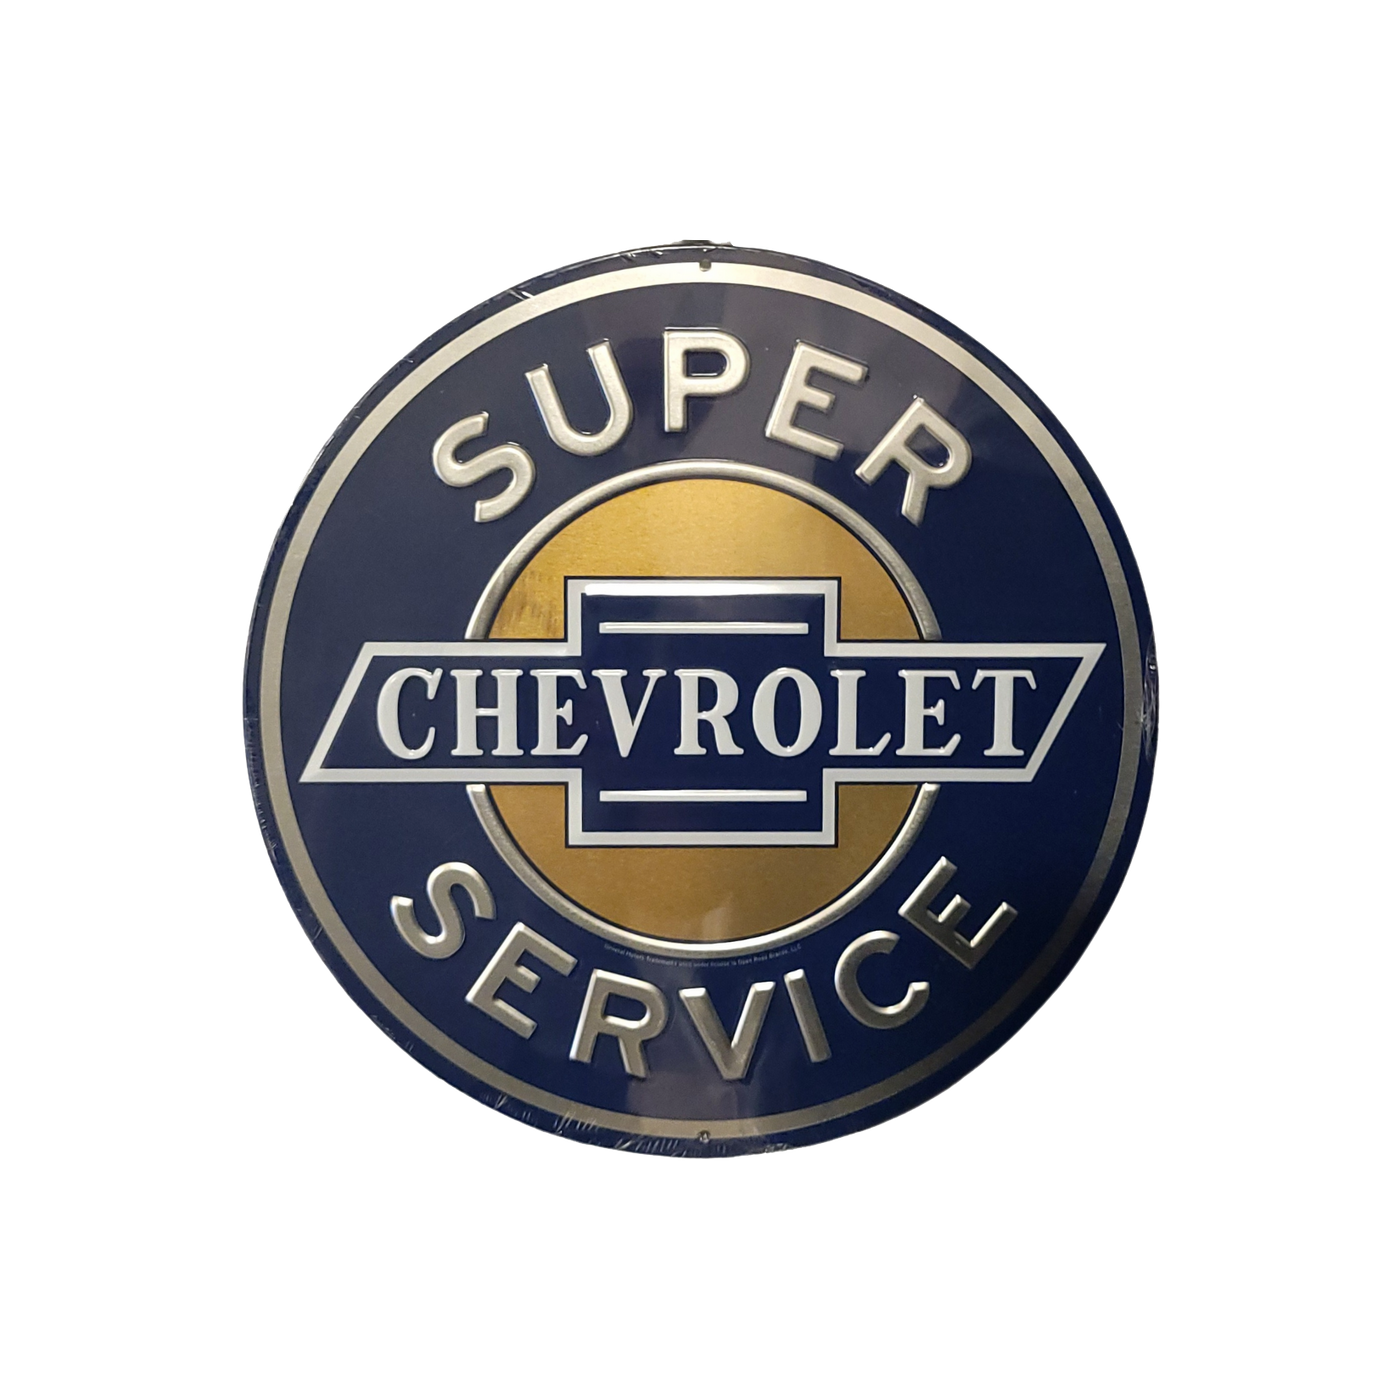 Chevy Super Service Metallic Metal Décor